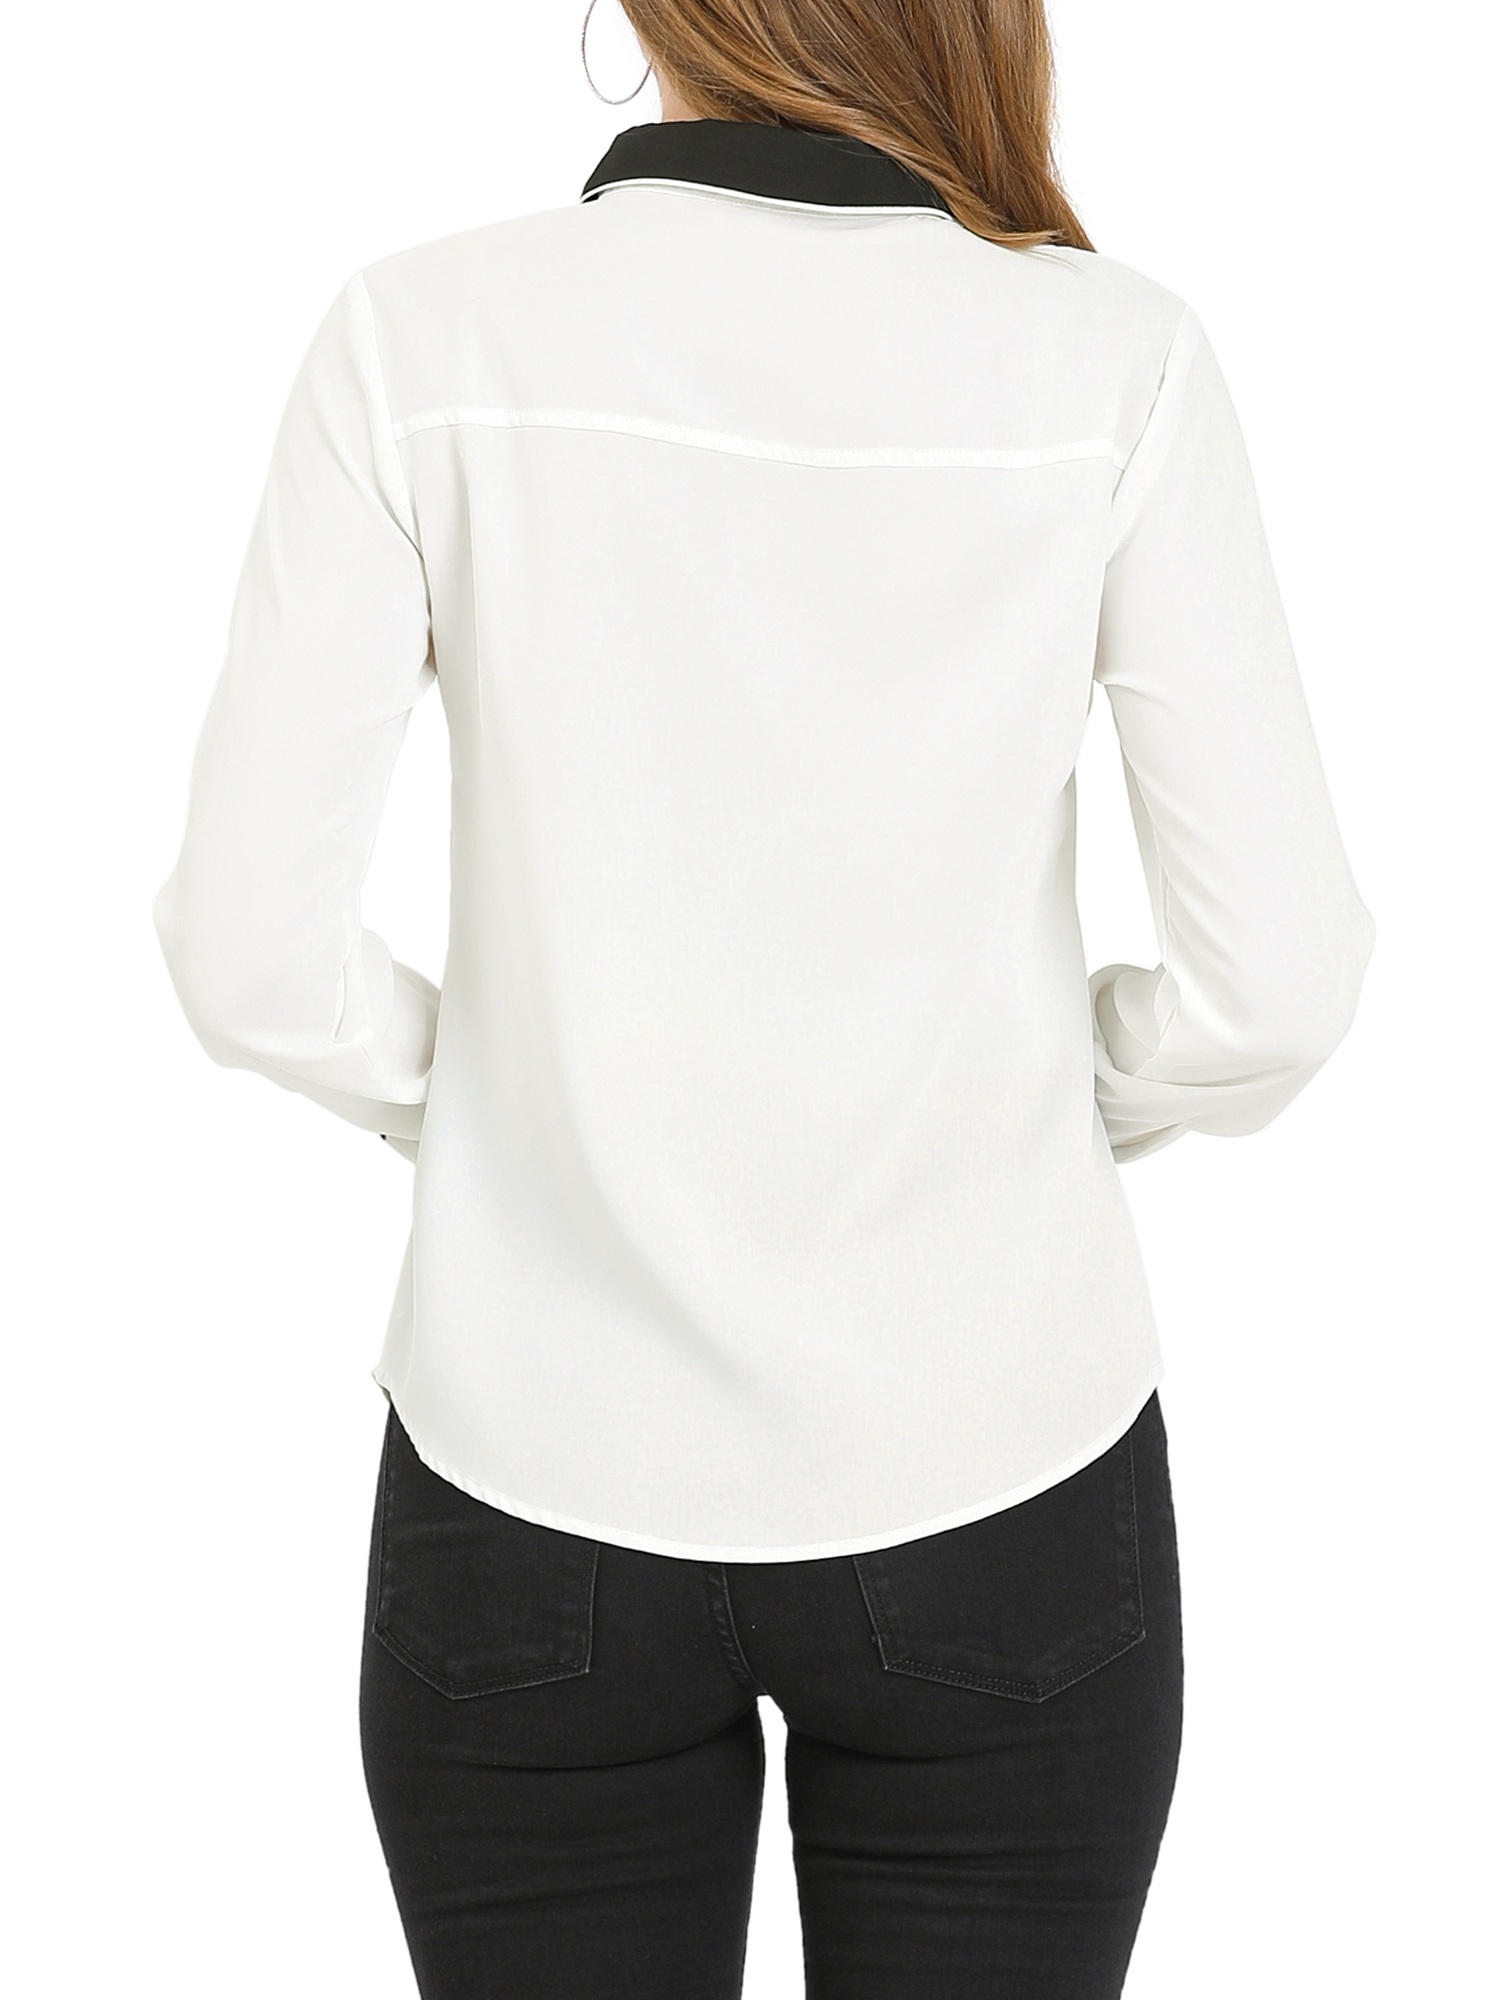 MODA NOVA Junior's Button Up Shirt Long Sleeve Buttons Cuff Top Blouse White XXL - image 3 of 5